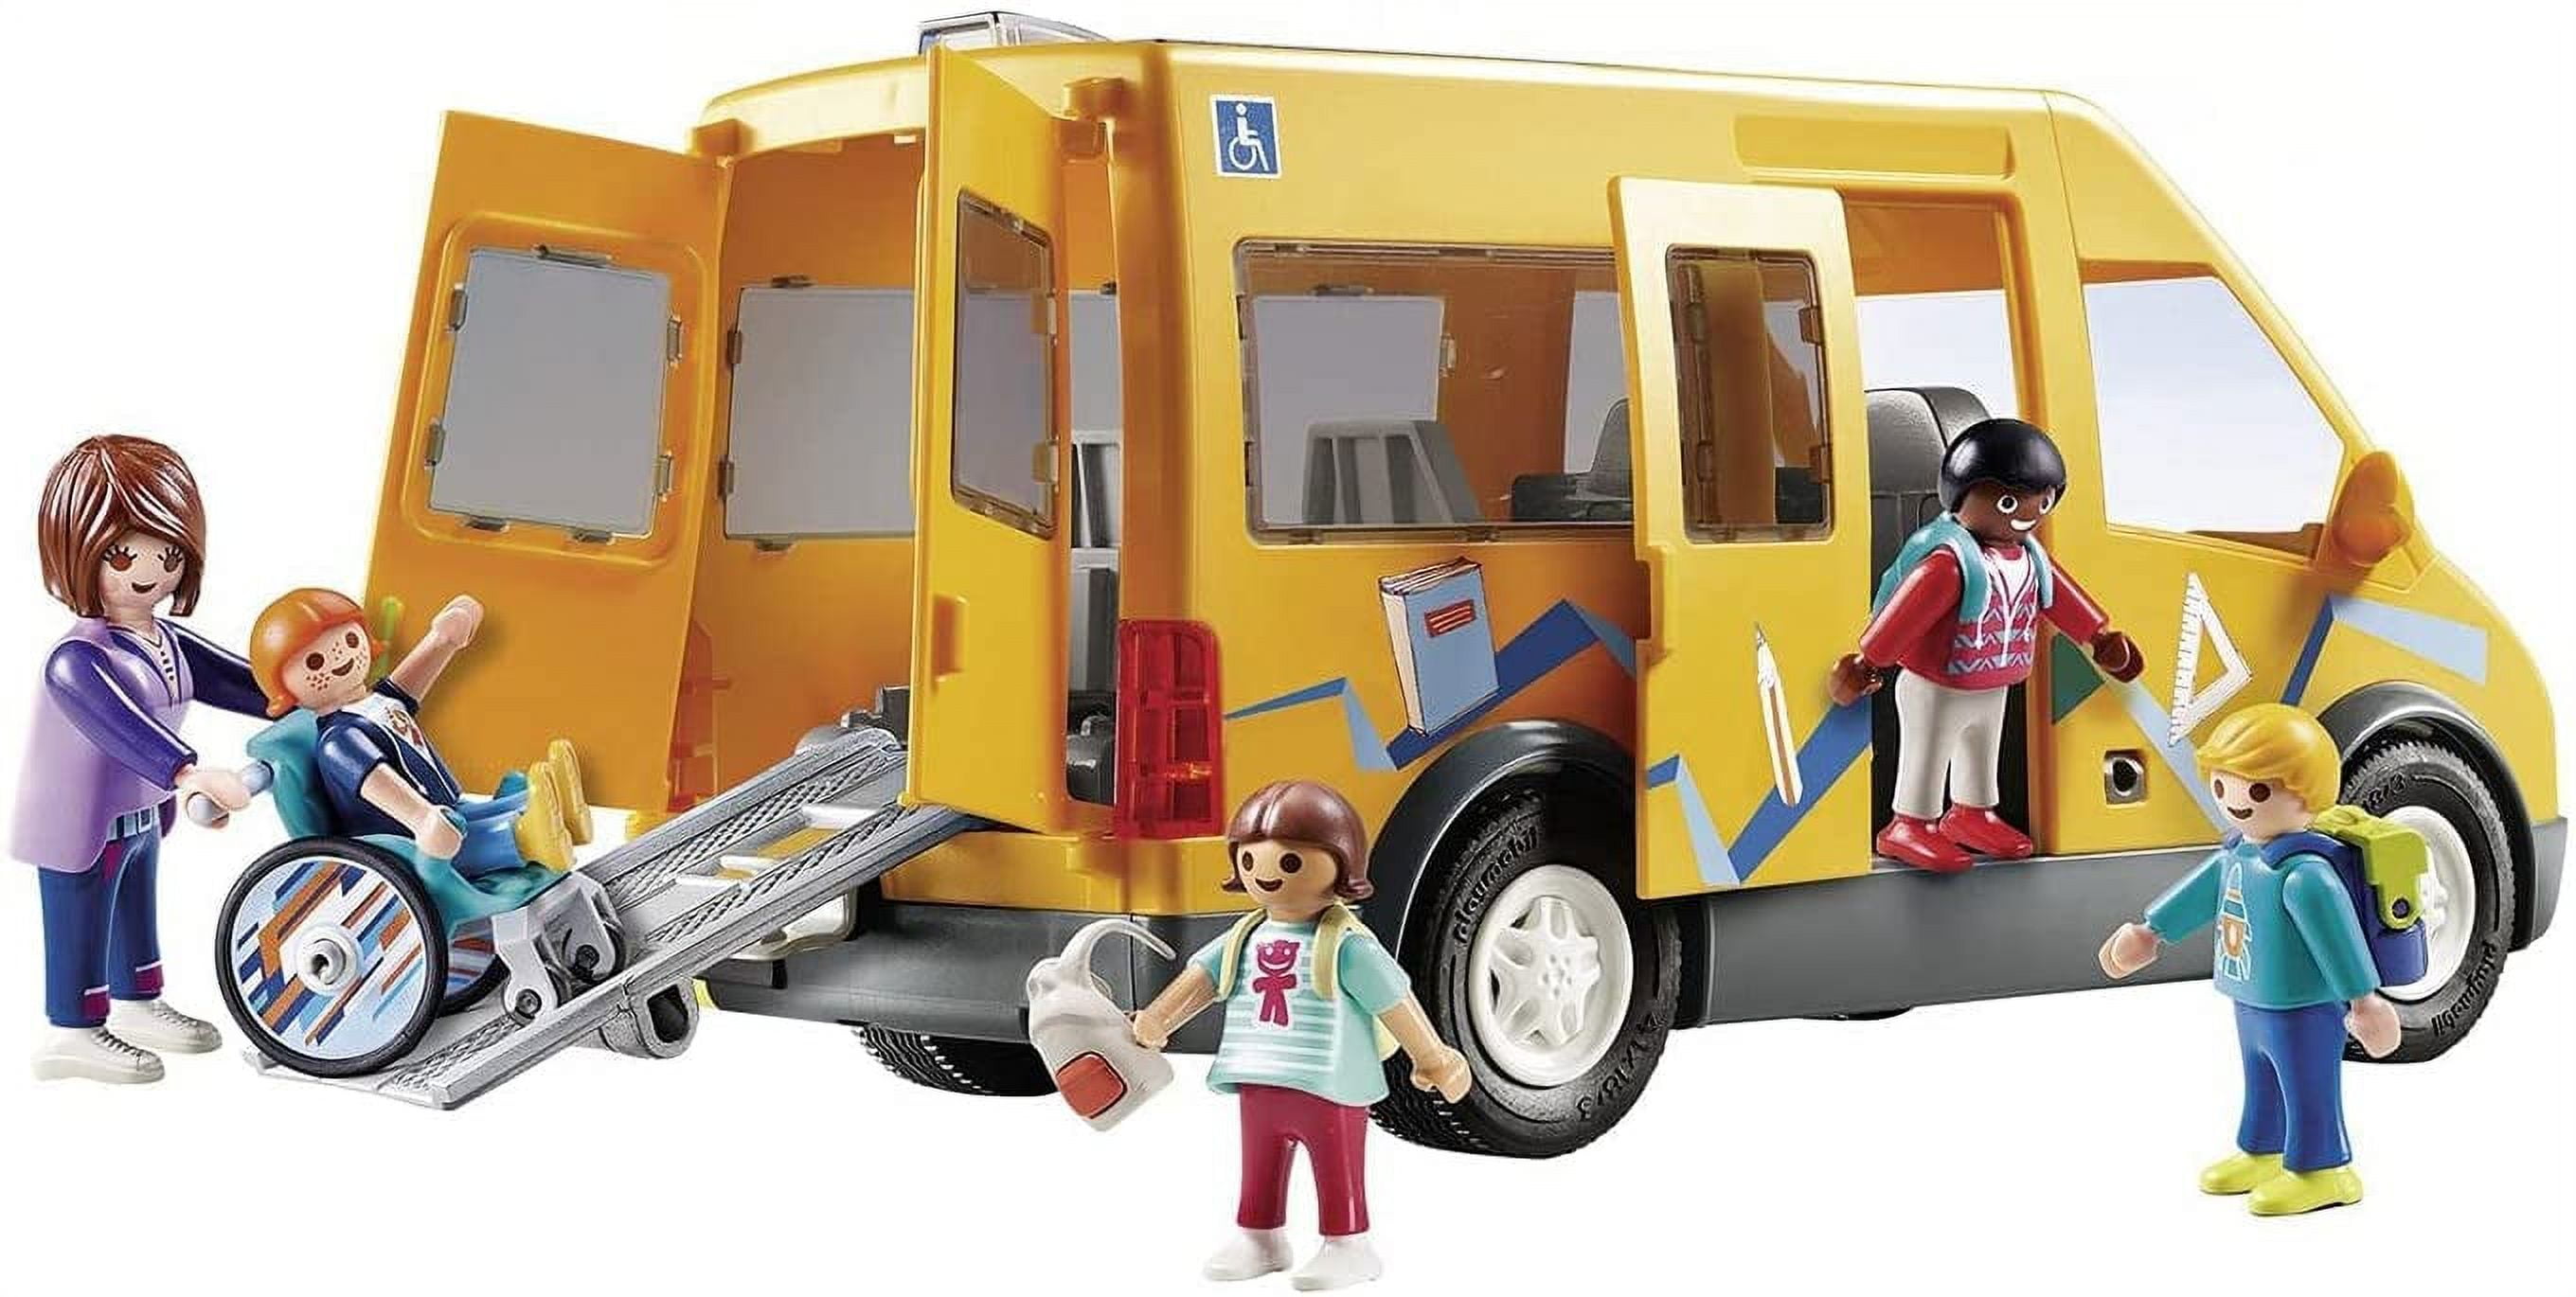 Playmobil City Life Bus Scolaire 9419